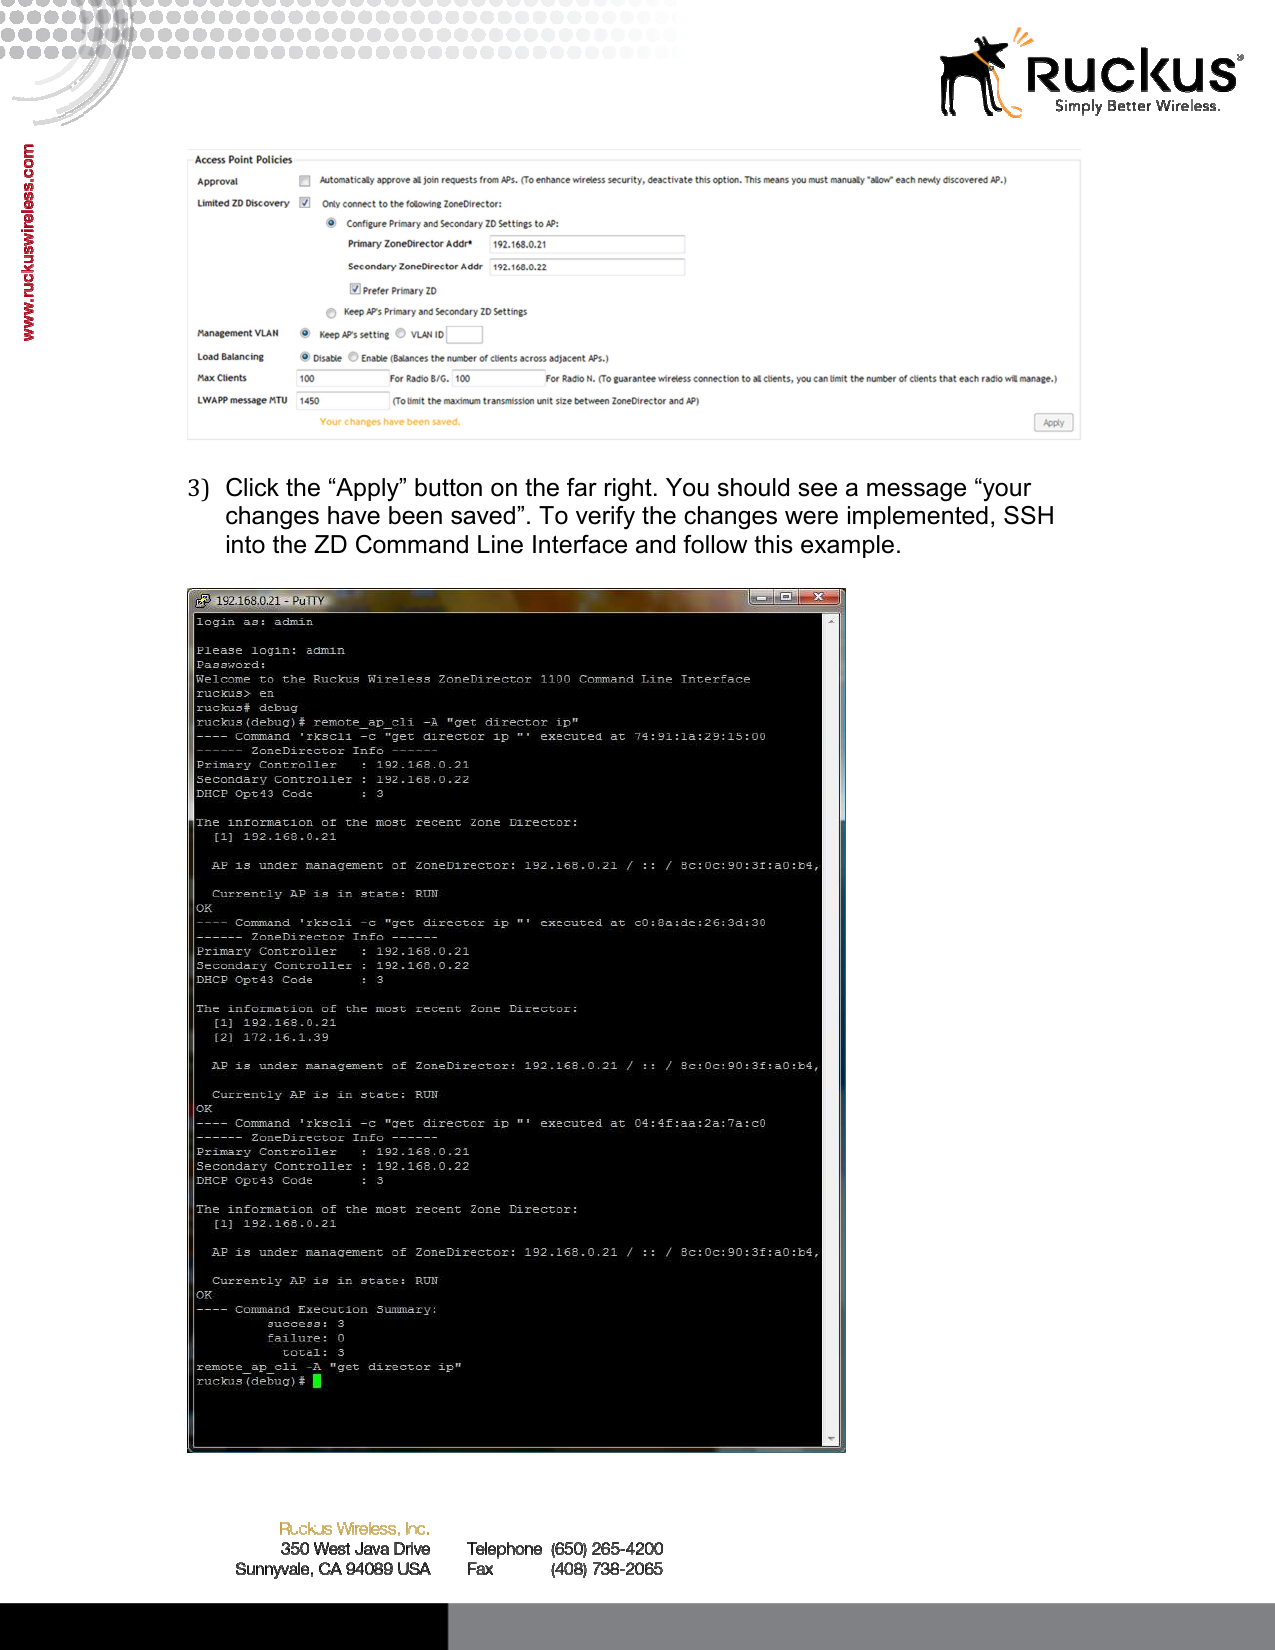 Page 3 of 6 - Ruckus - ZD1100_971 MR Upgrade ZD1100 9.7.1.0.17 (MR) Software Release 971